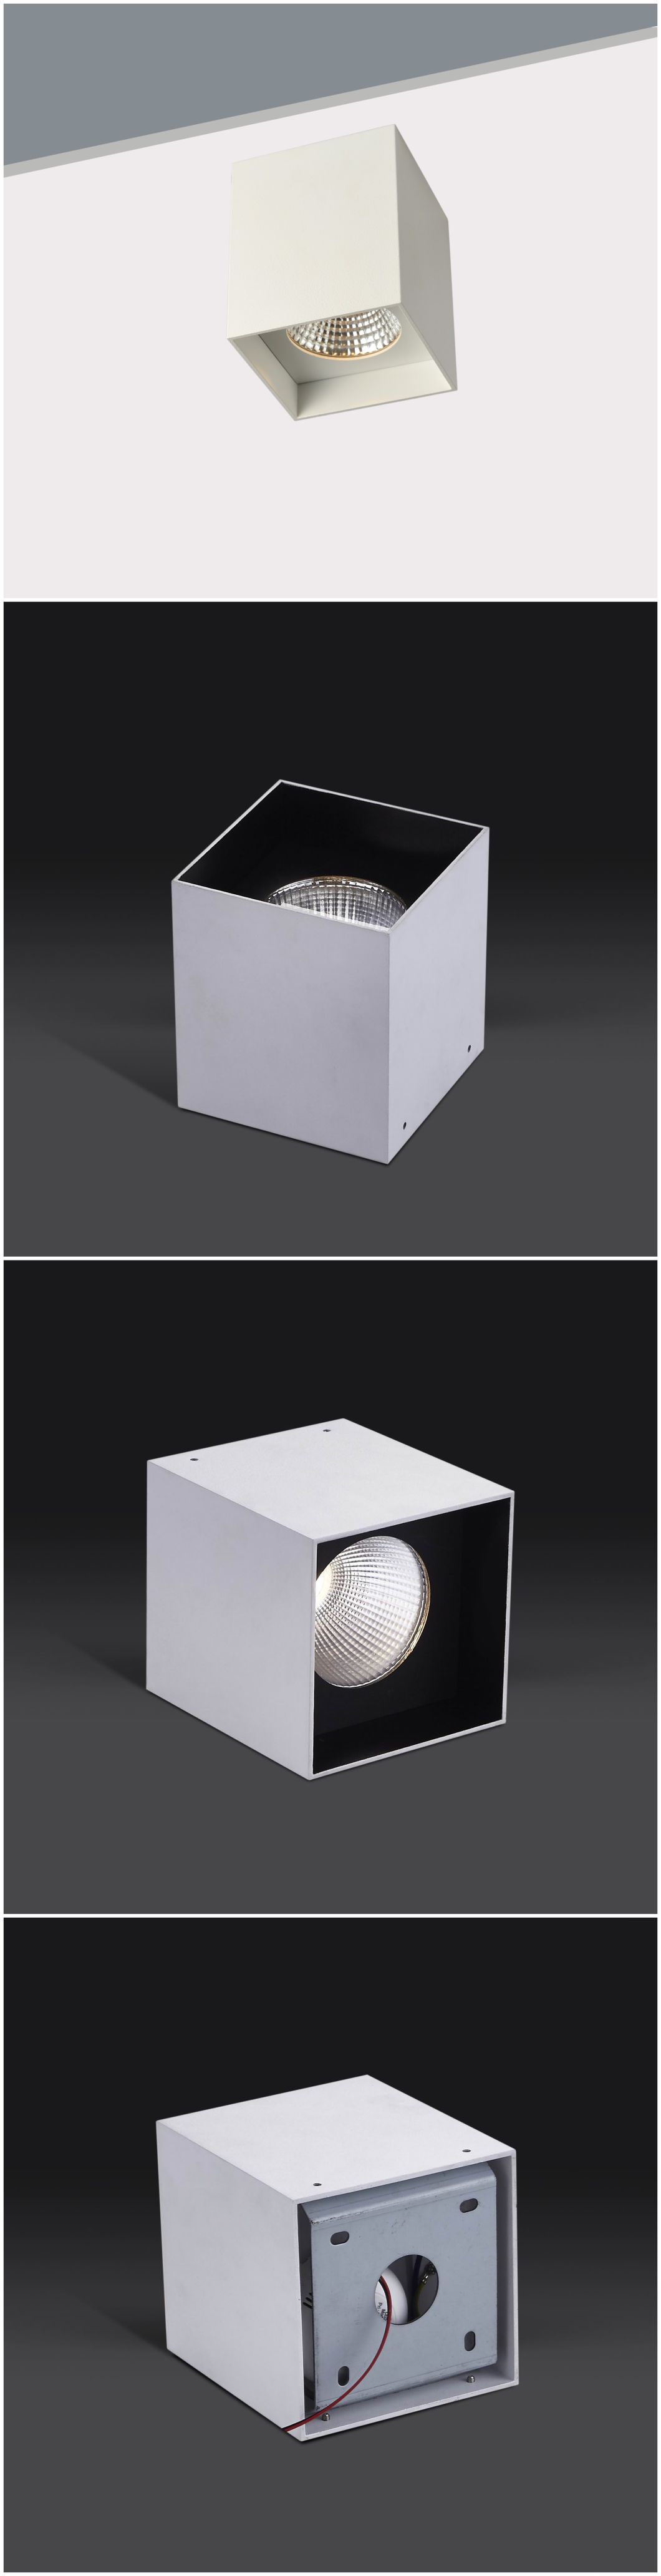 Mounted Surface LED Down Light, Square Aluminum LED Ceiling Light